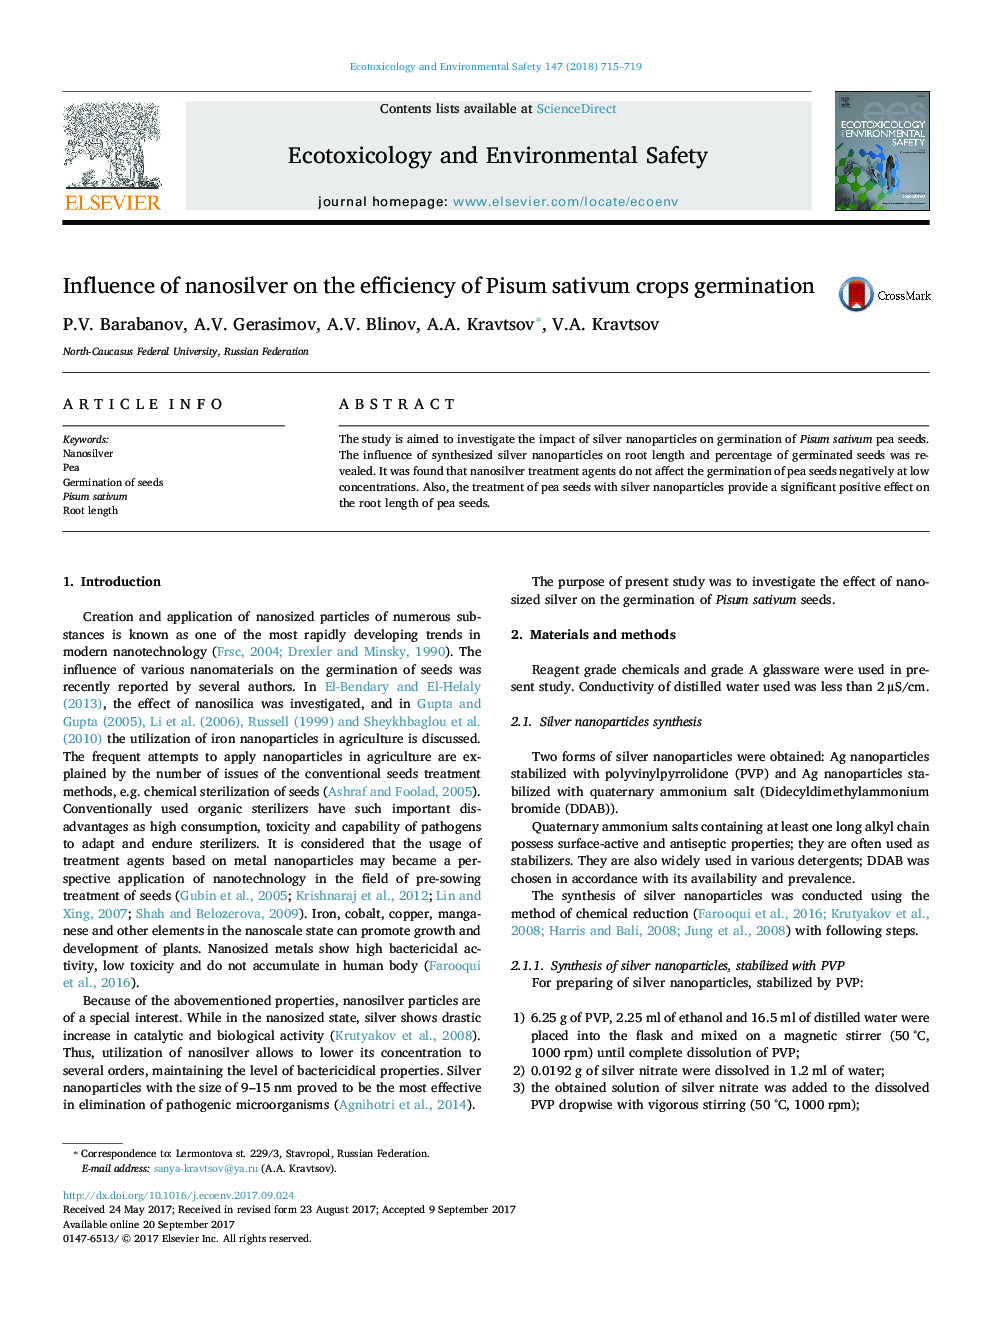 Influence of nanosilver on the efficiency of Pisum sativum crops germination